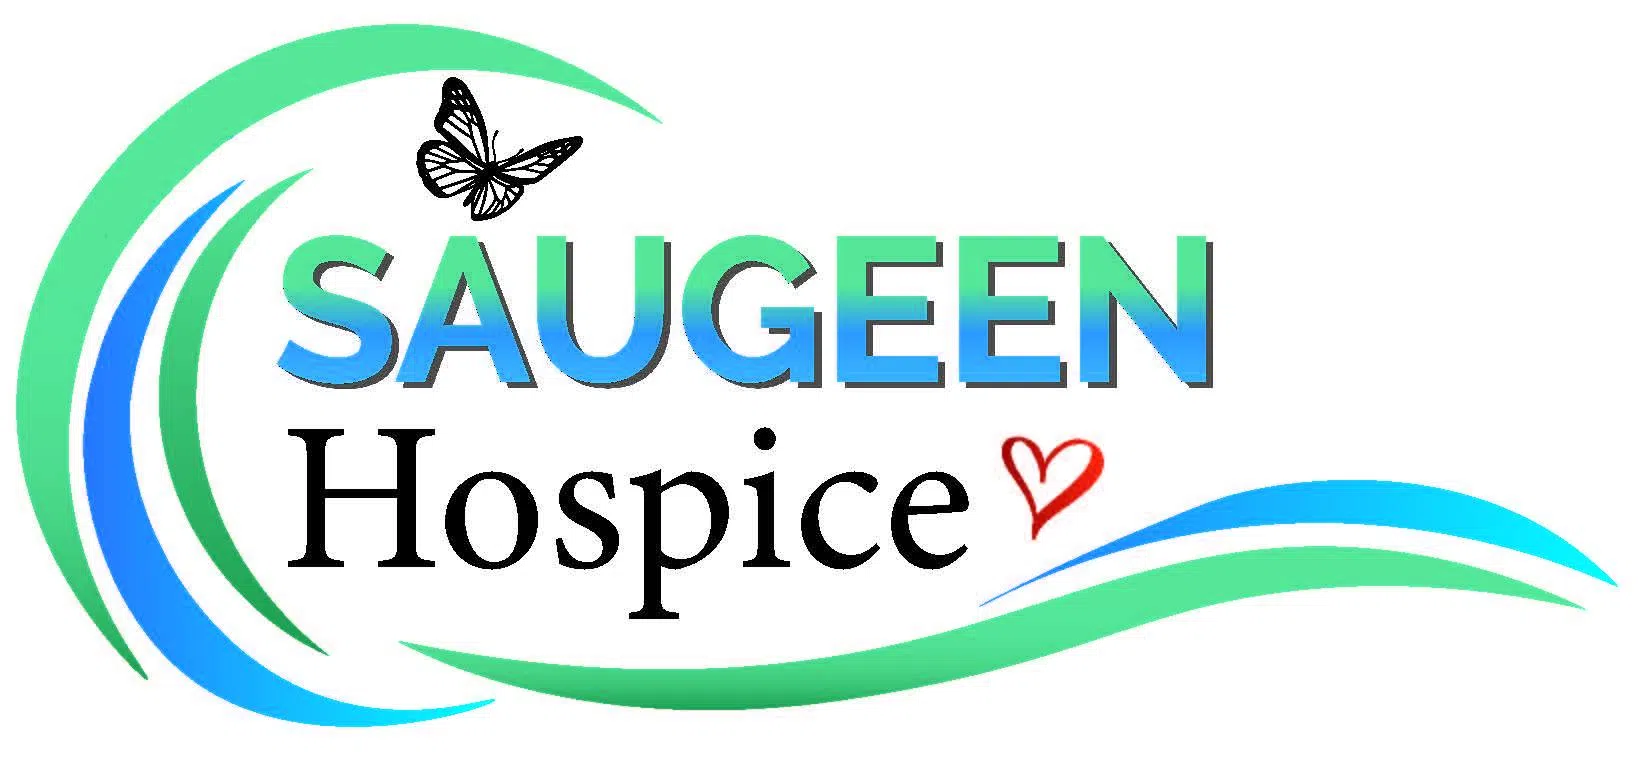 Saugeen Hospice Receives Charitable Status, Has Big Plans For Development